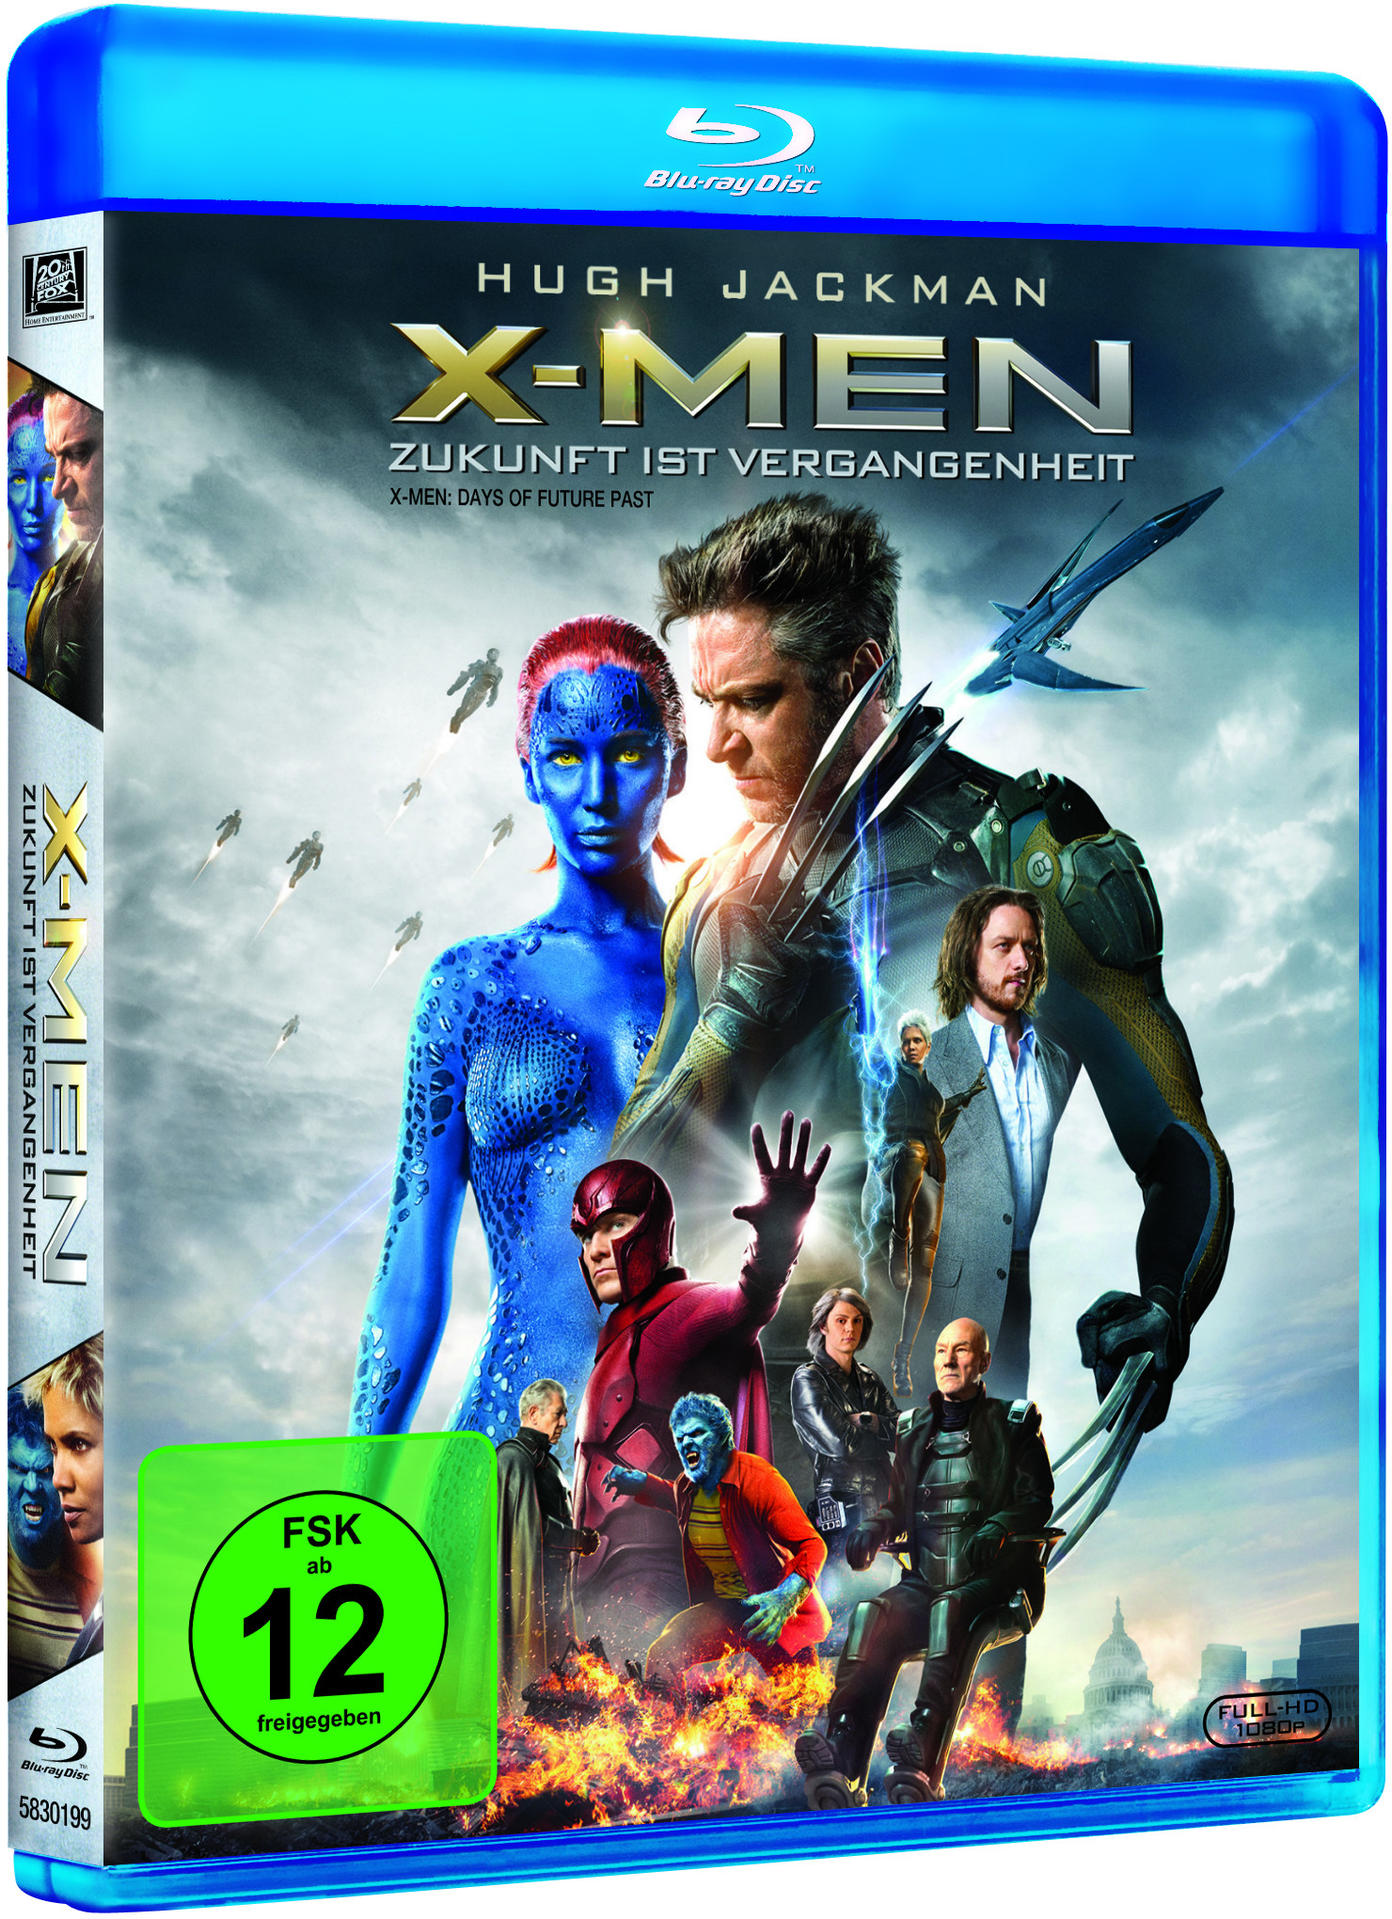 Vergangenheit Zukunft Blu-ray - ist X-Men